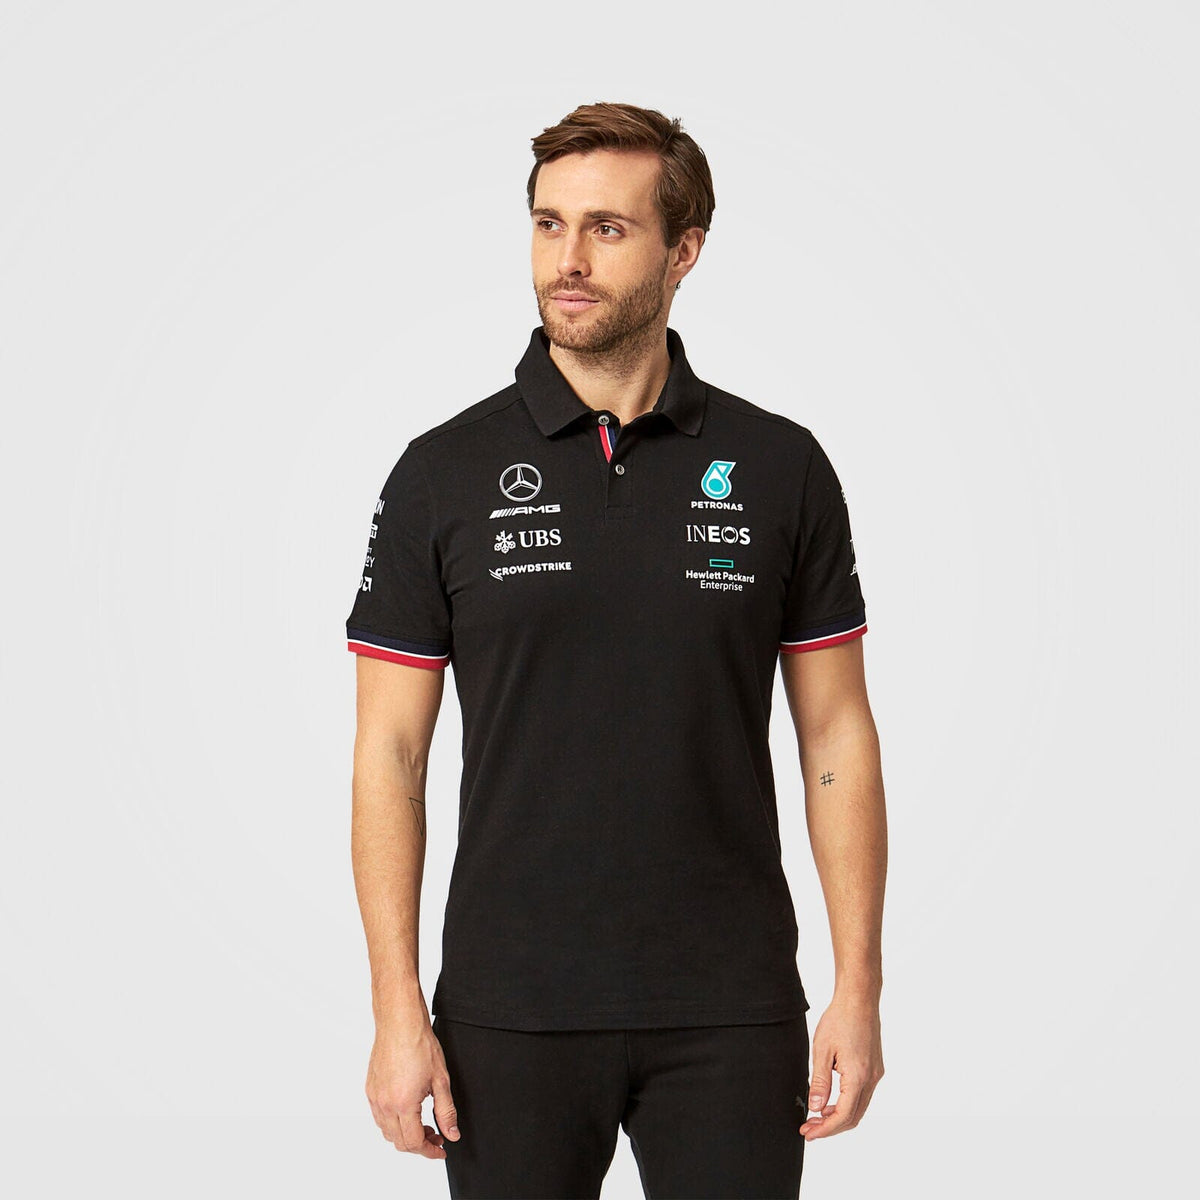 Beat Racewears Red Bull Racing 2020 Polo Shirt 3XL